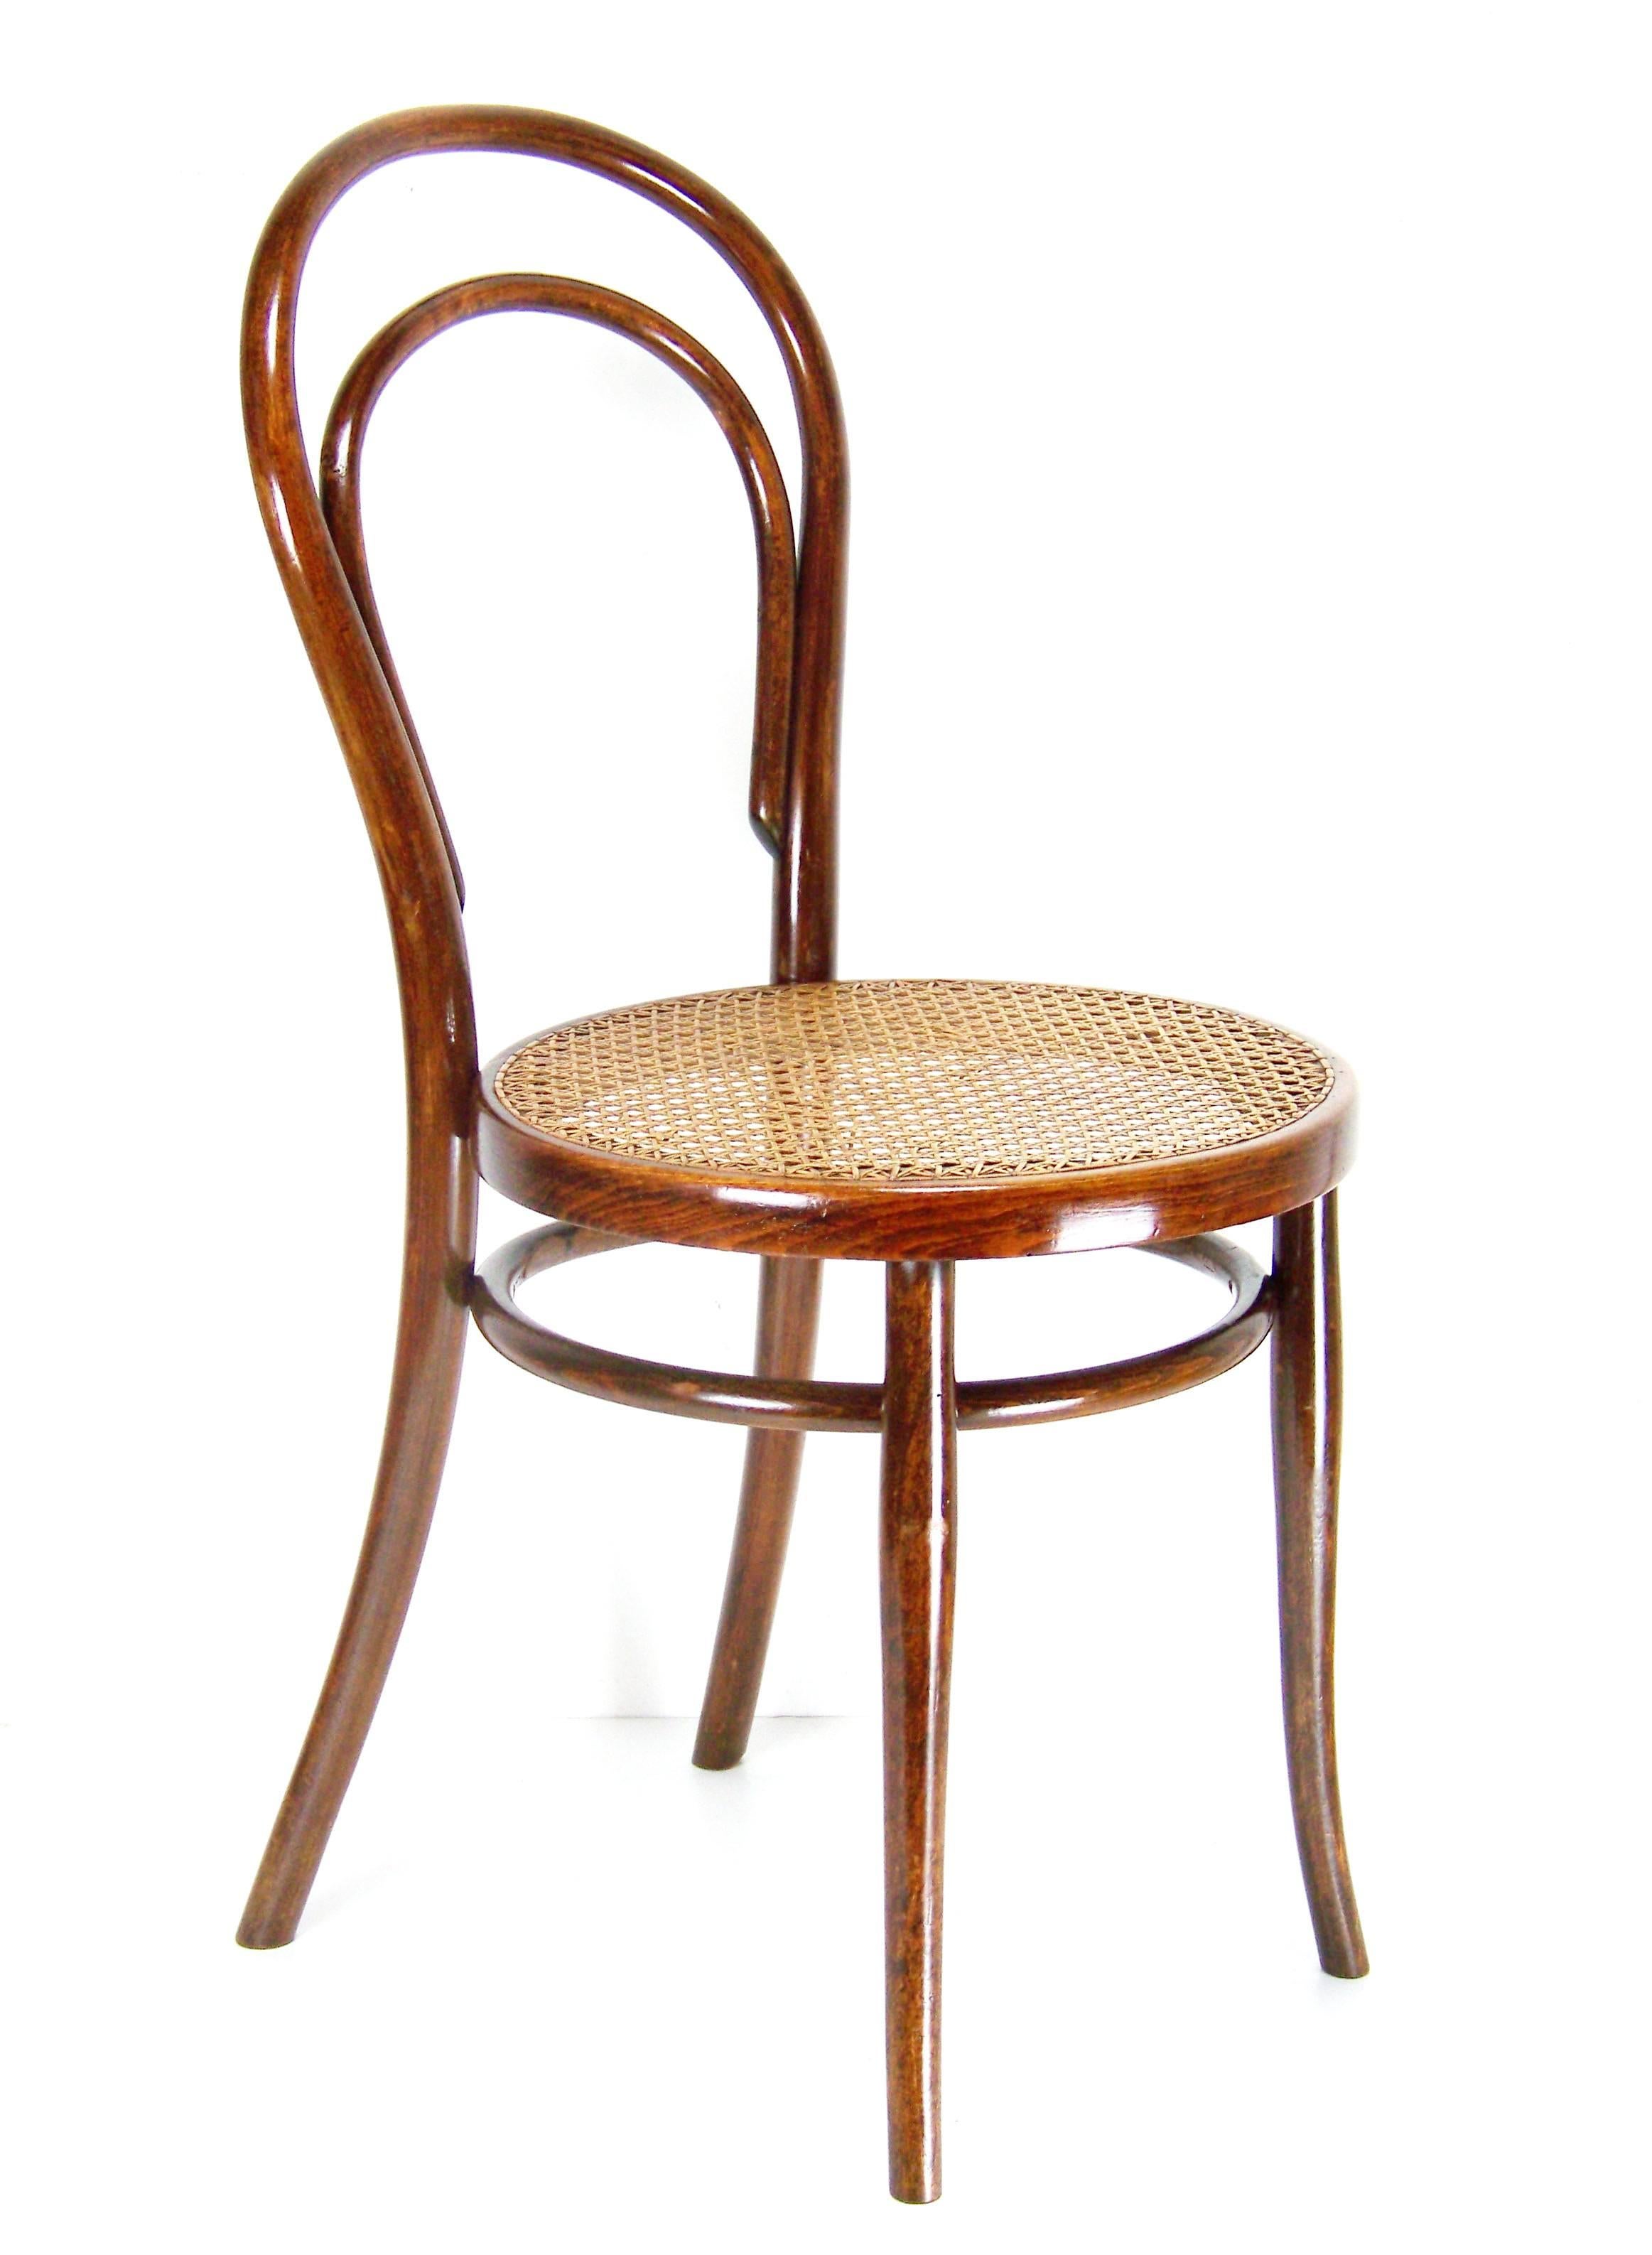 Art Nouveau Viennese Bentwood Chair Thonet Nr. 14, circa 1887-1910